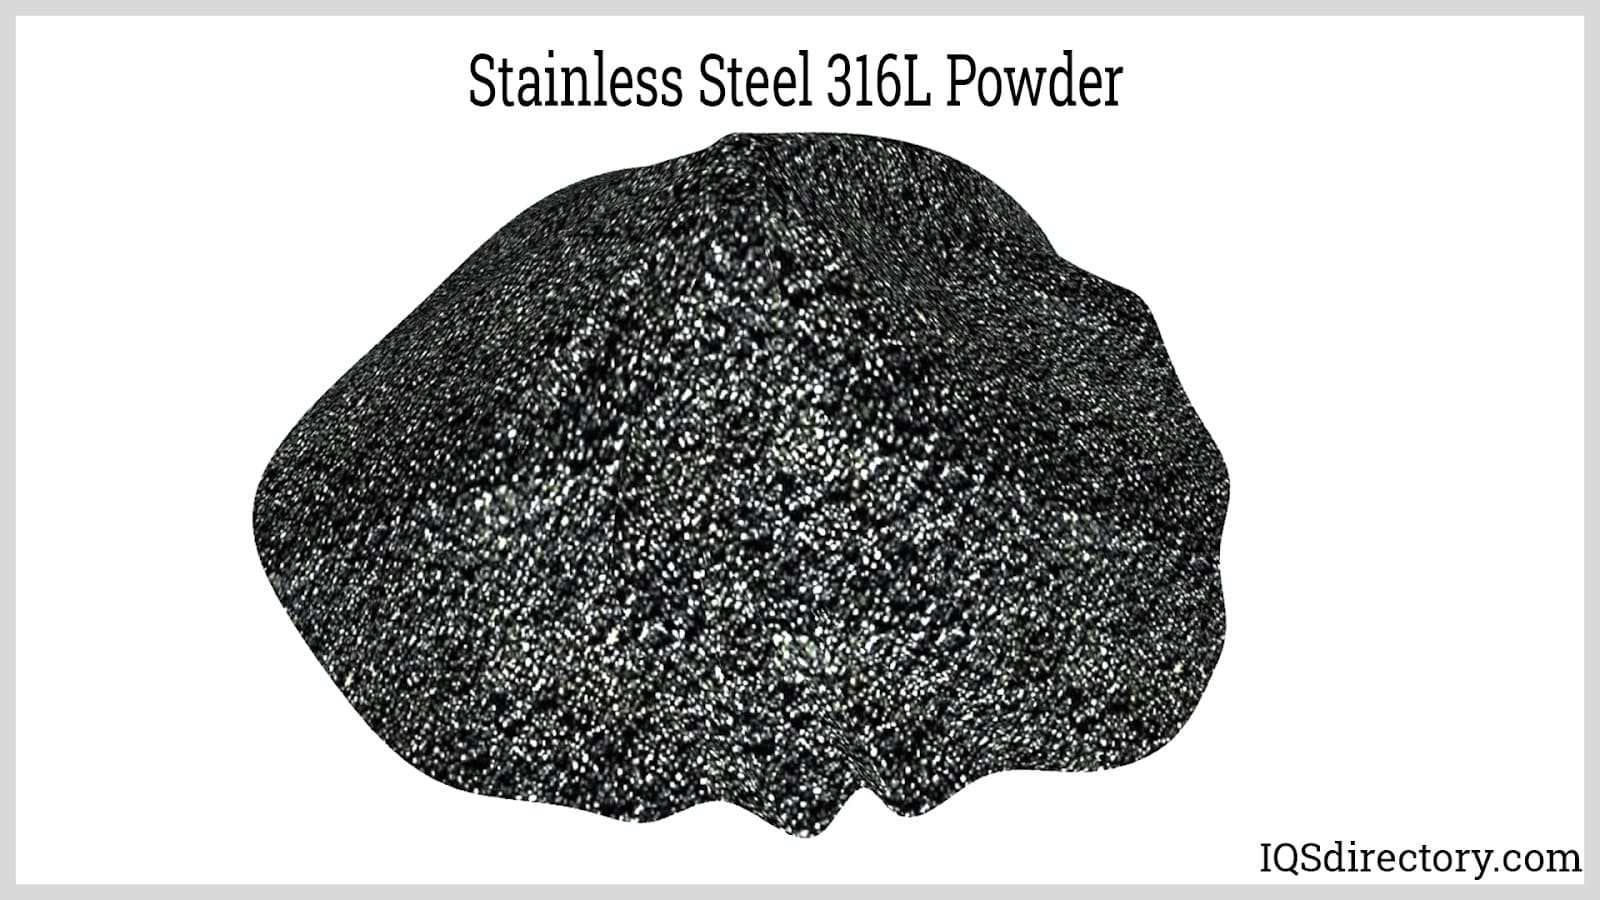 Stainless Steel 316L Powder